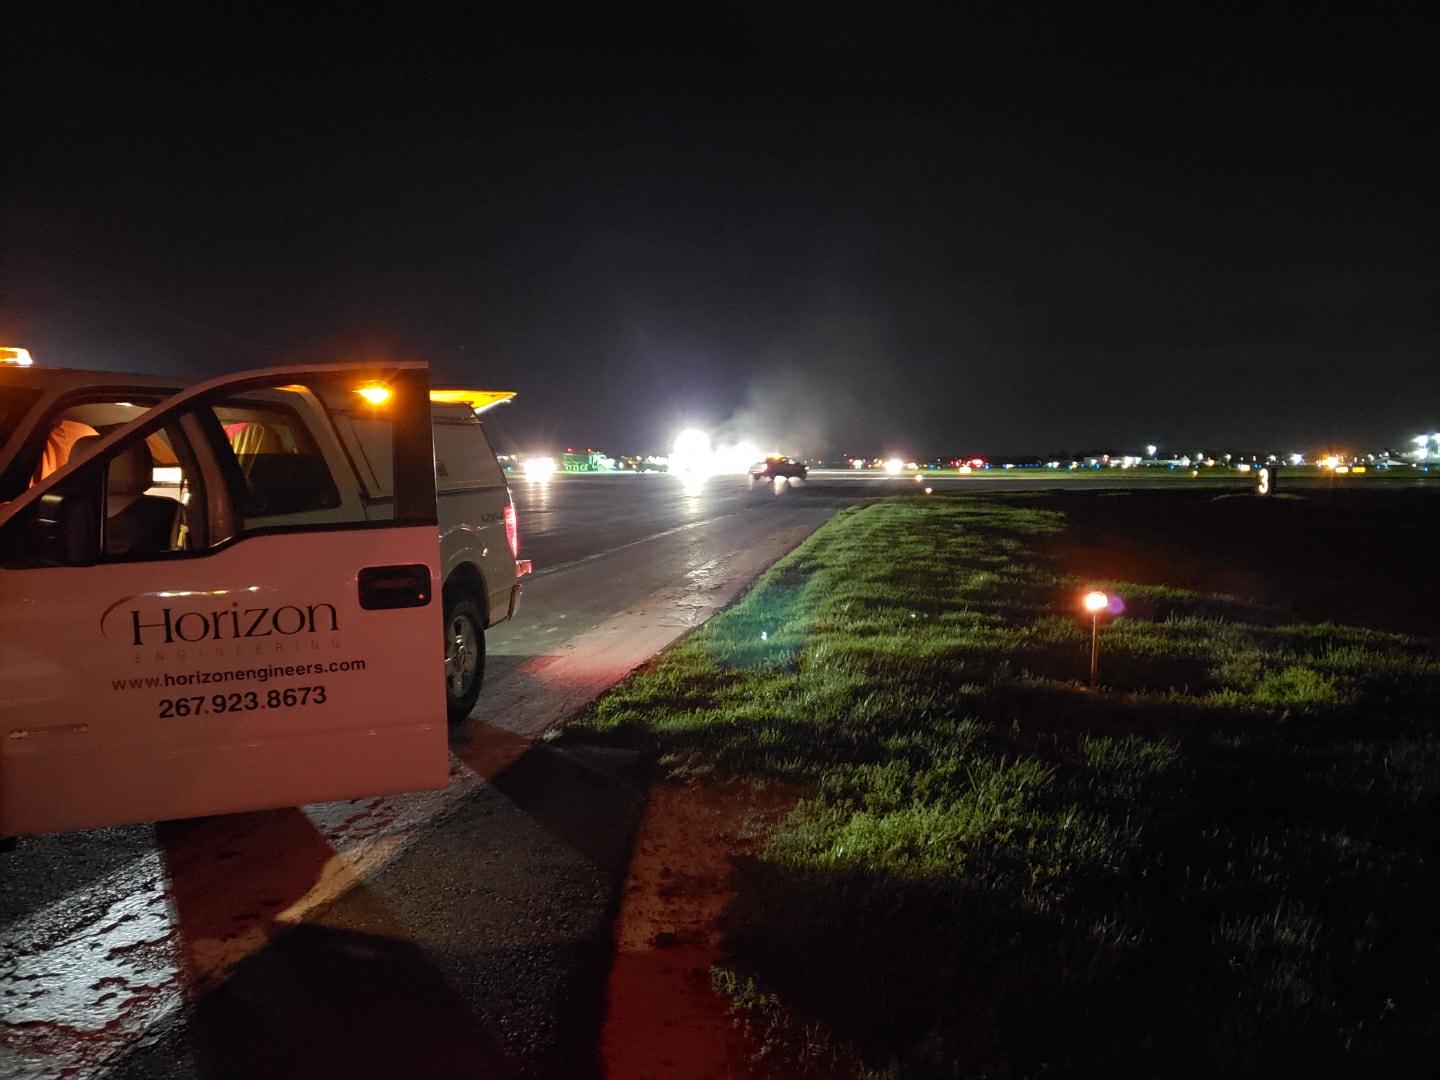 Horizon Engineering Survey Crew working at Lehigh Valley International Airport at night